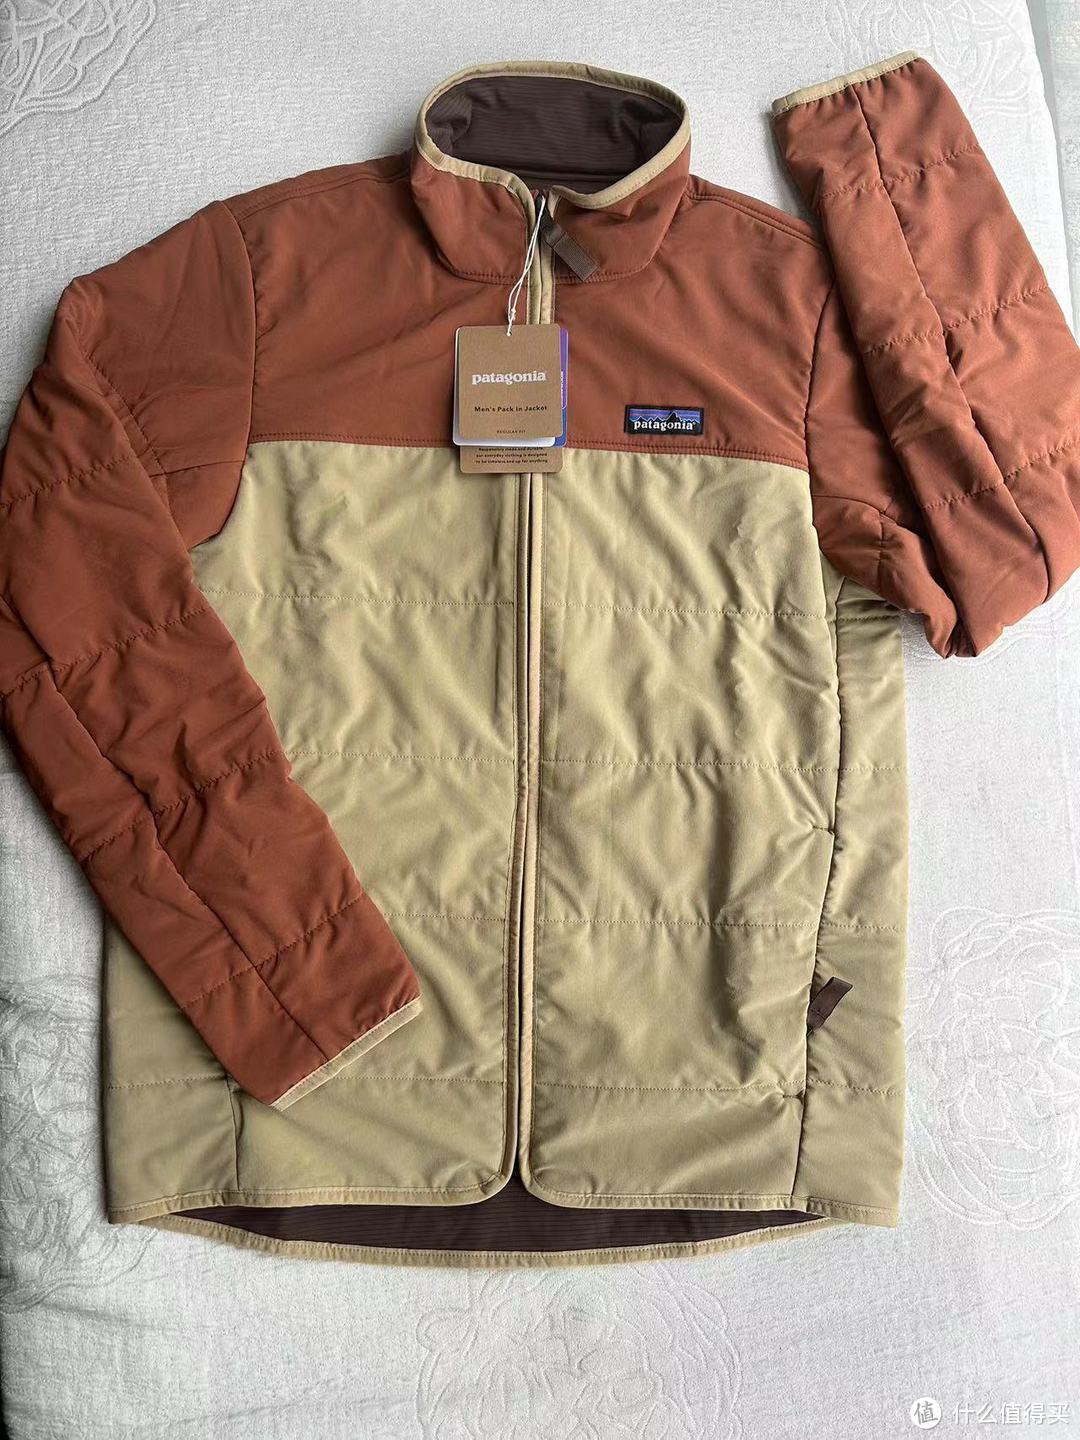 Patagonia pack in jacket, 20945, XS, tan